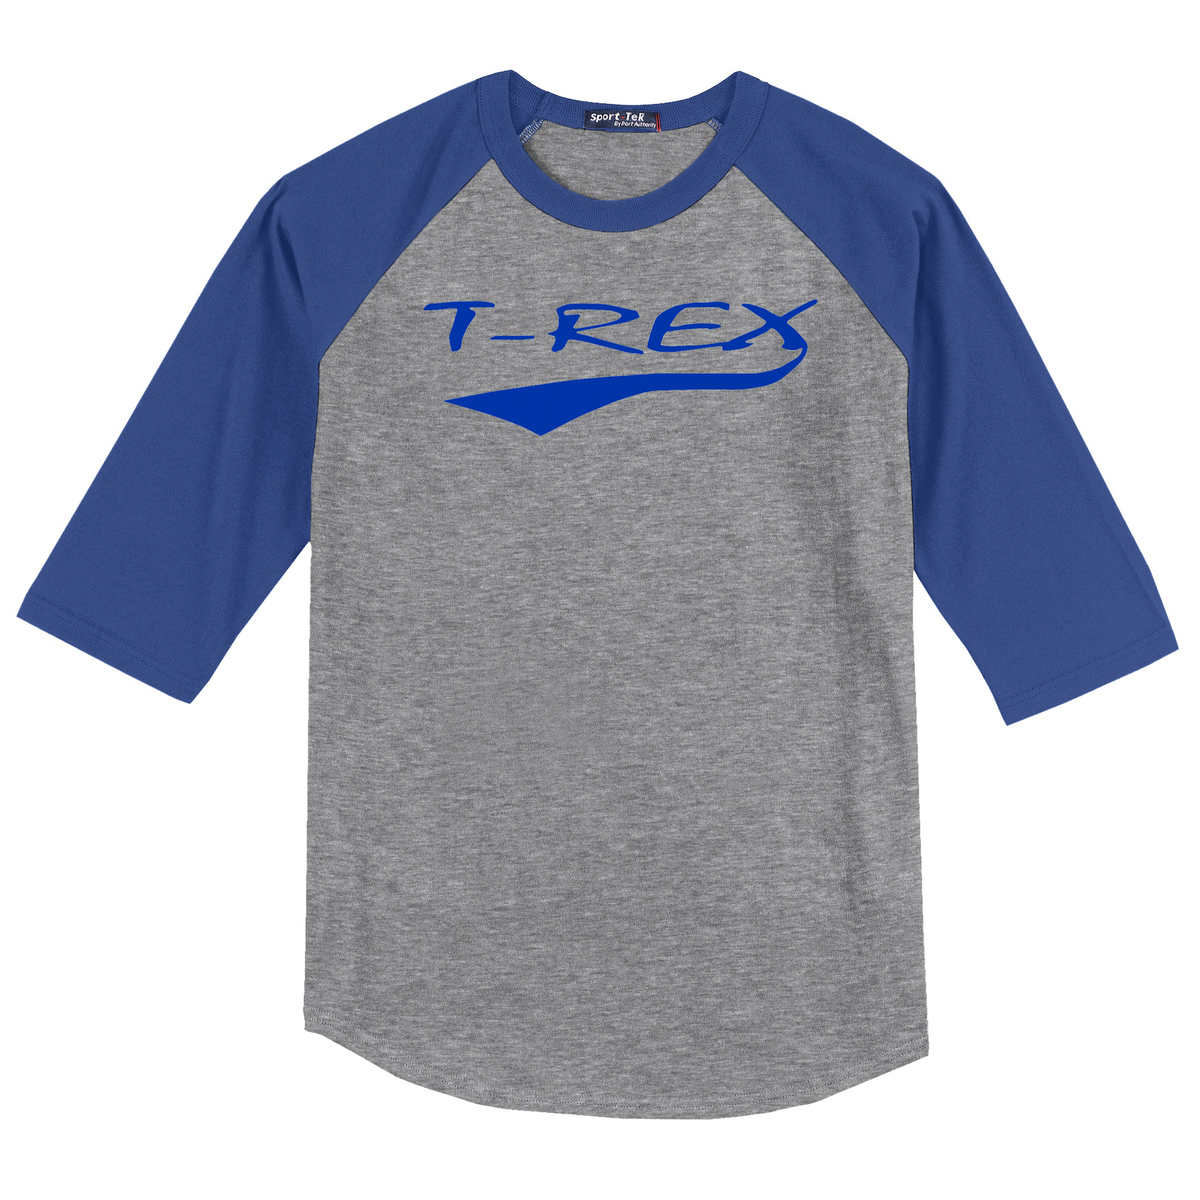 T-Rex Baseball 3/4 Sleeve Baseball Shirt